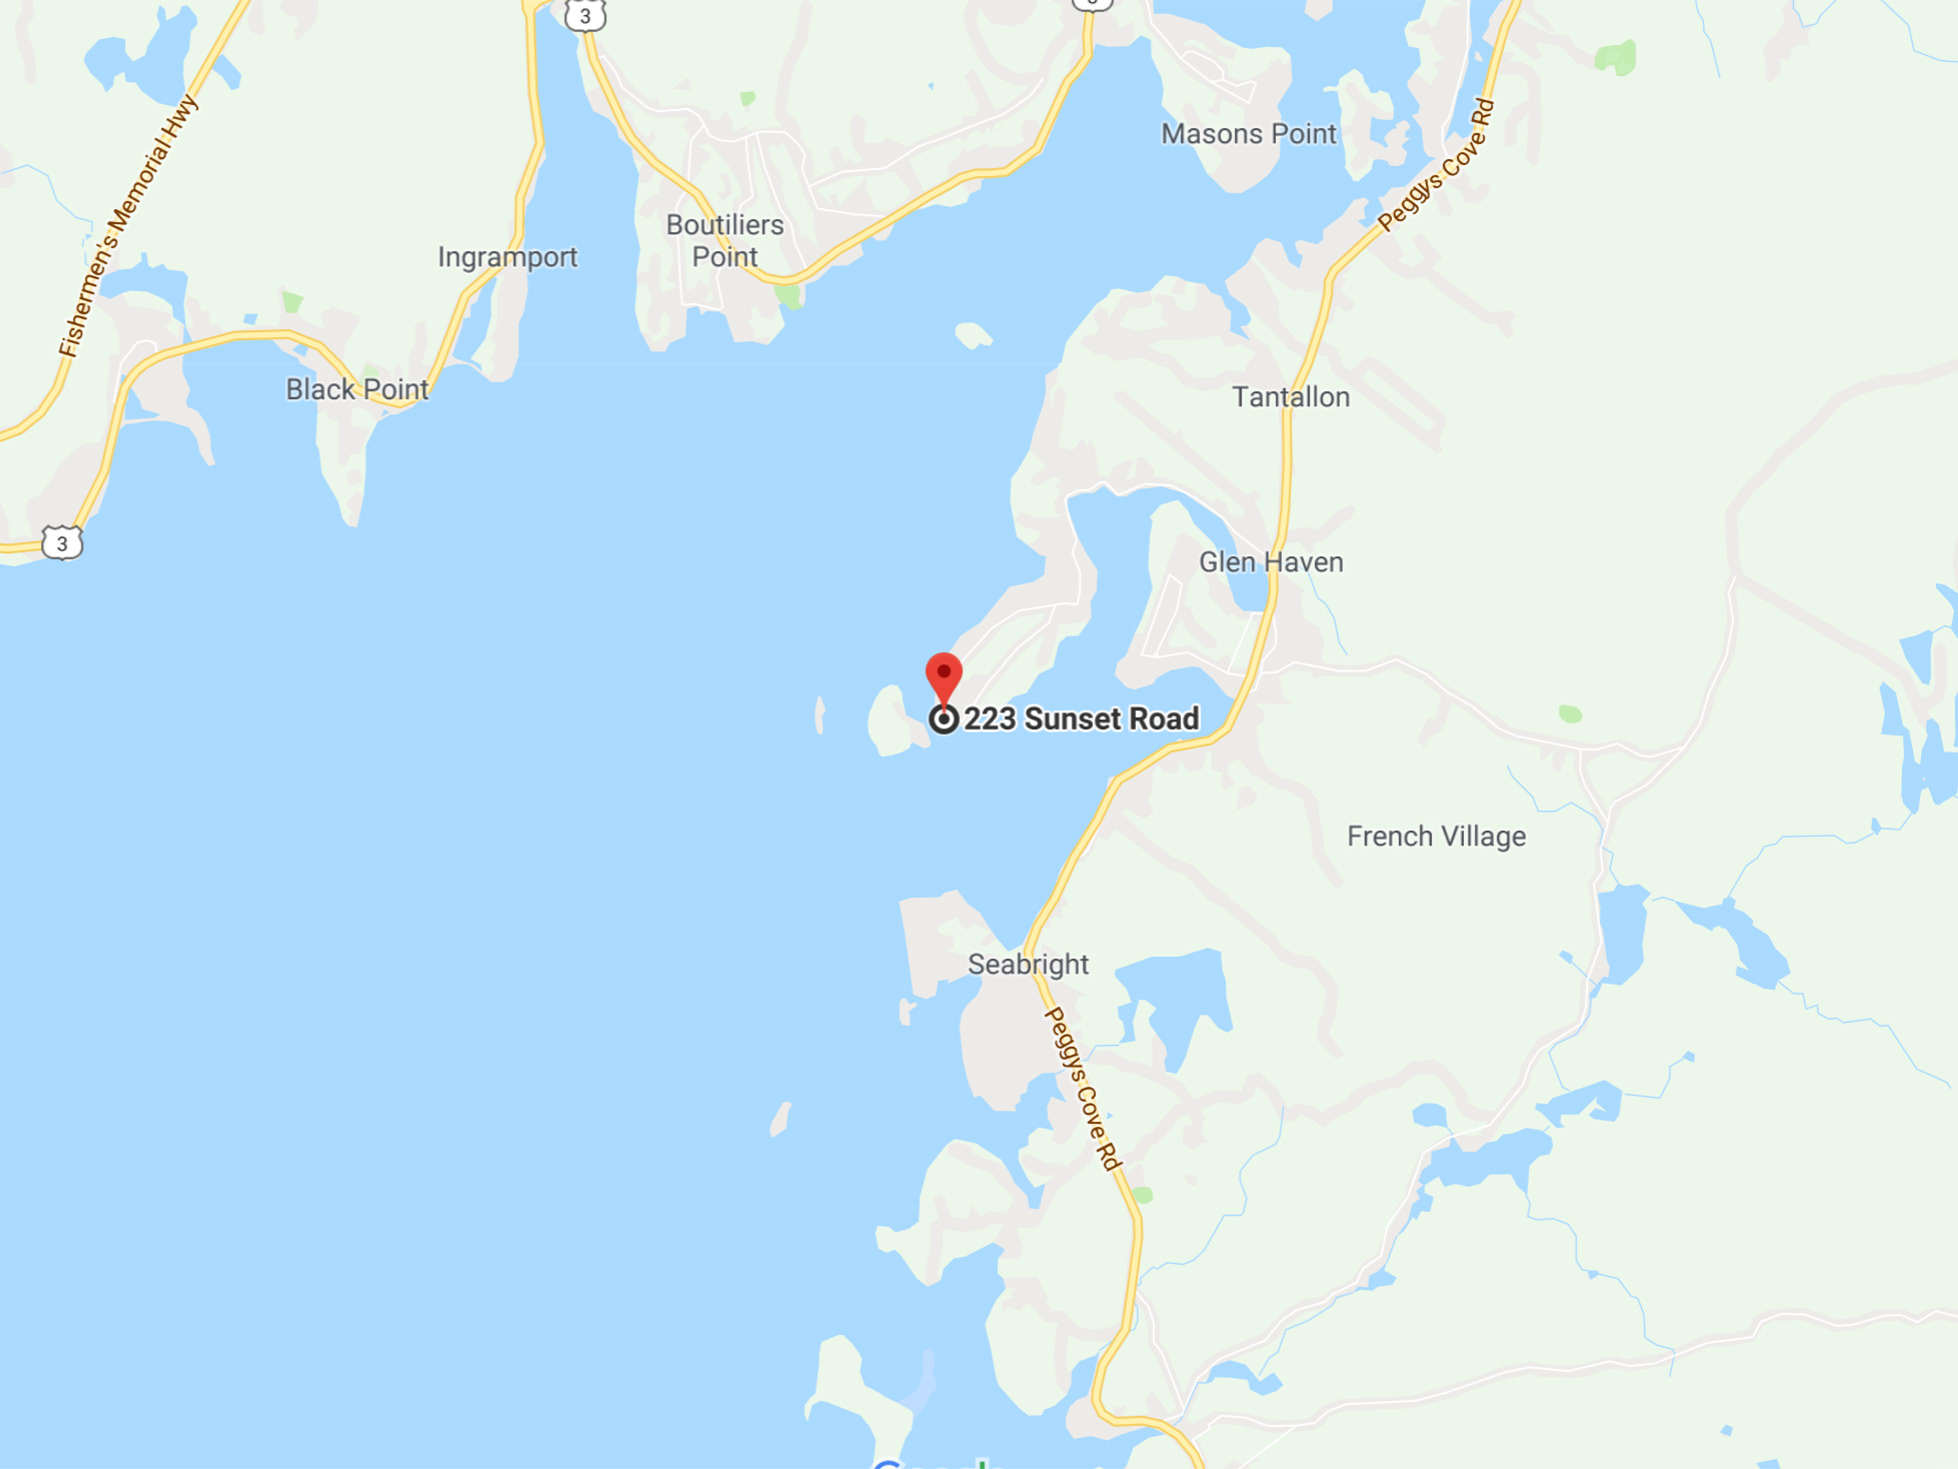 Indian Point Scuba Diving Site On St Margarets Bay, Nova Scotia, Canadian Splash